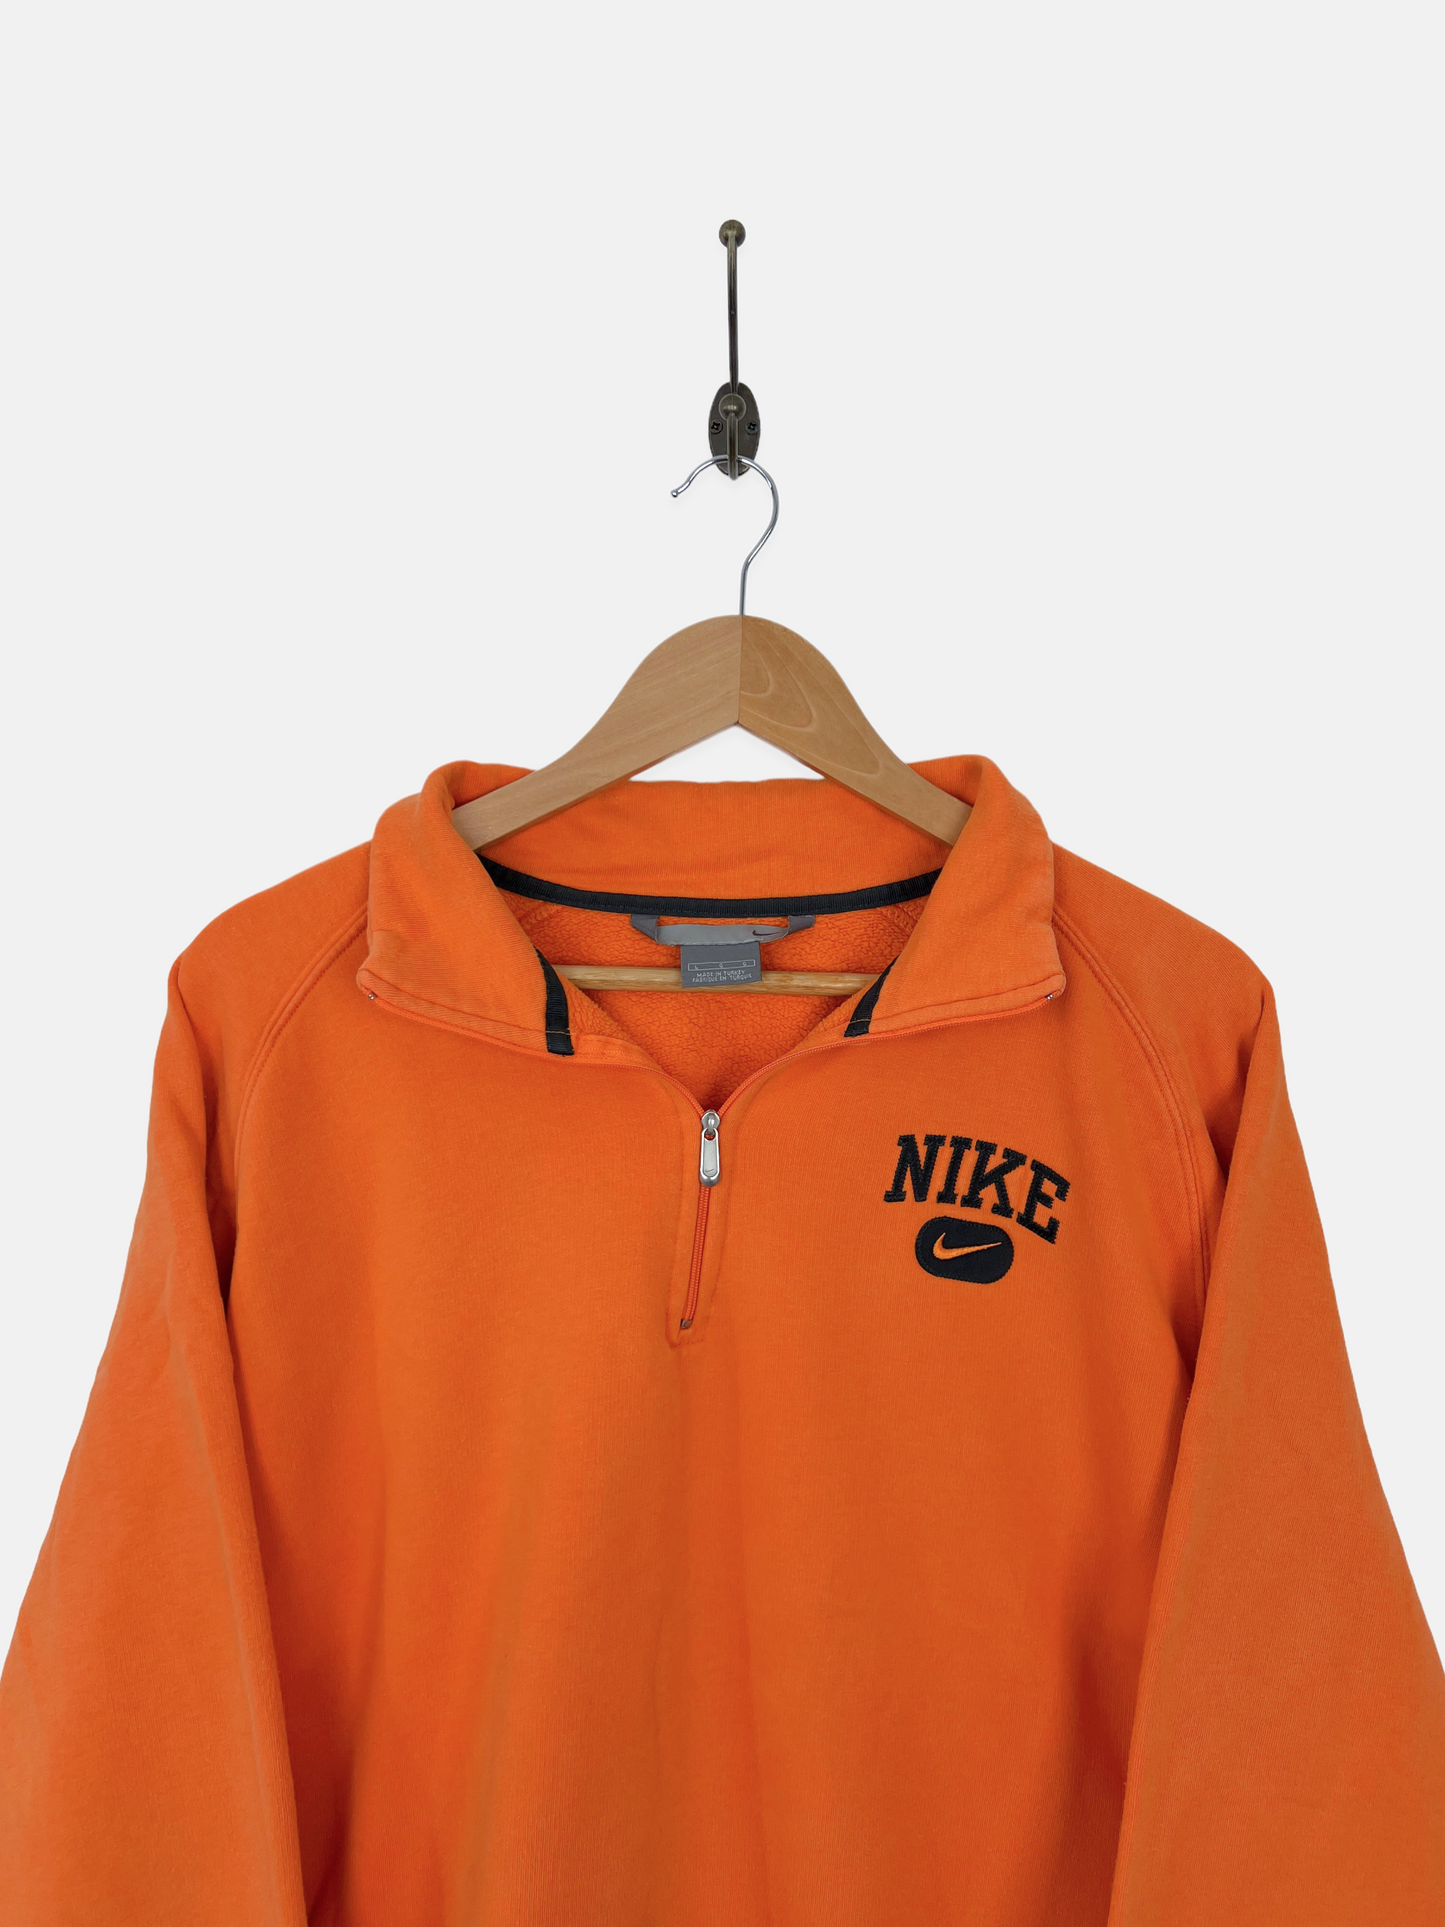 90's Nike Embroidered Vintage Quarterzip Sweatshirt Size L